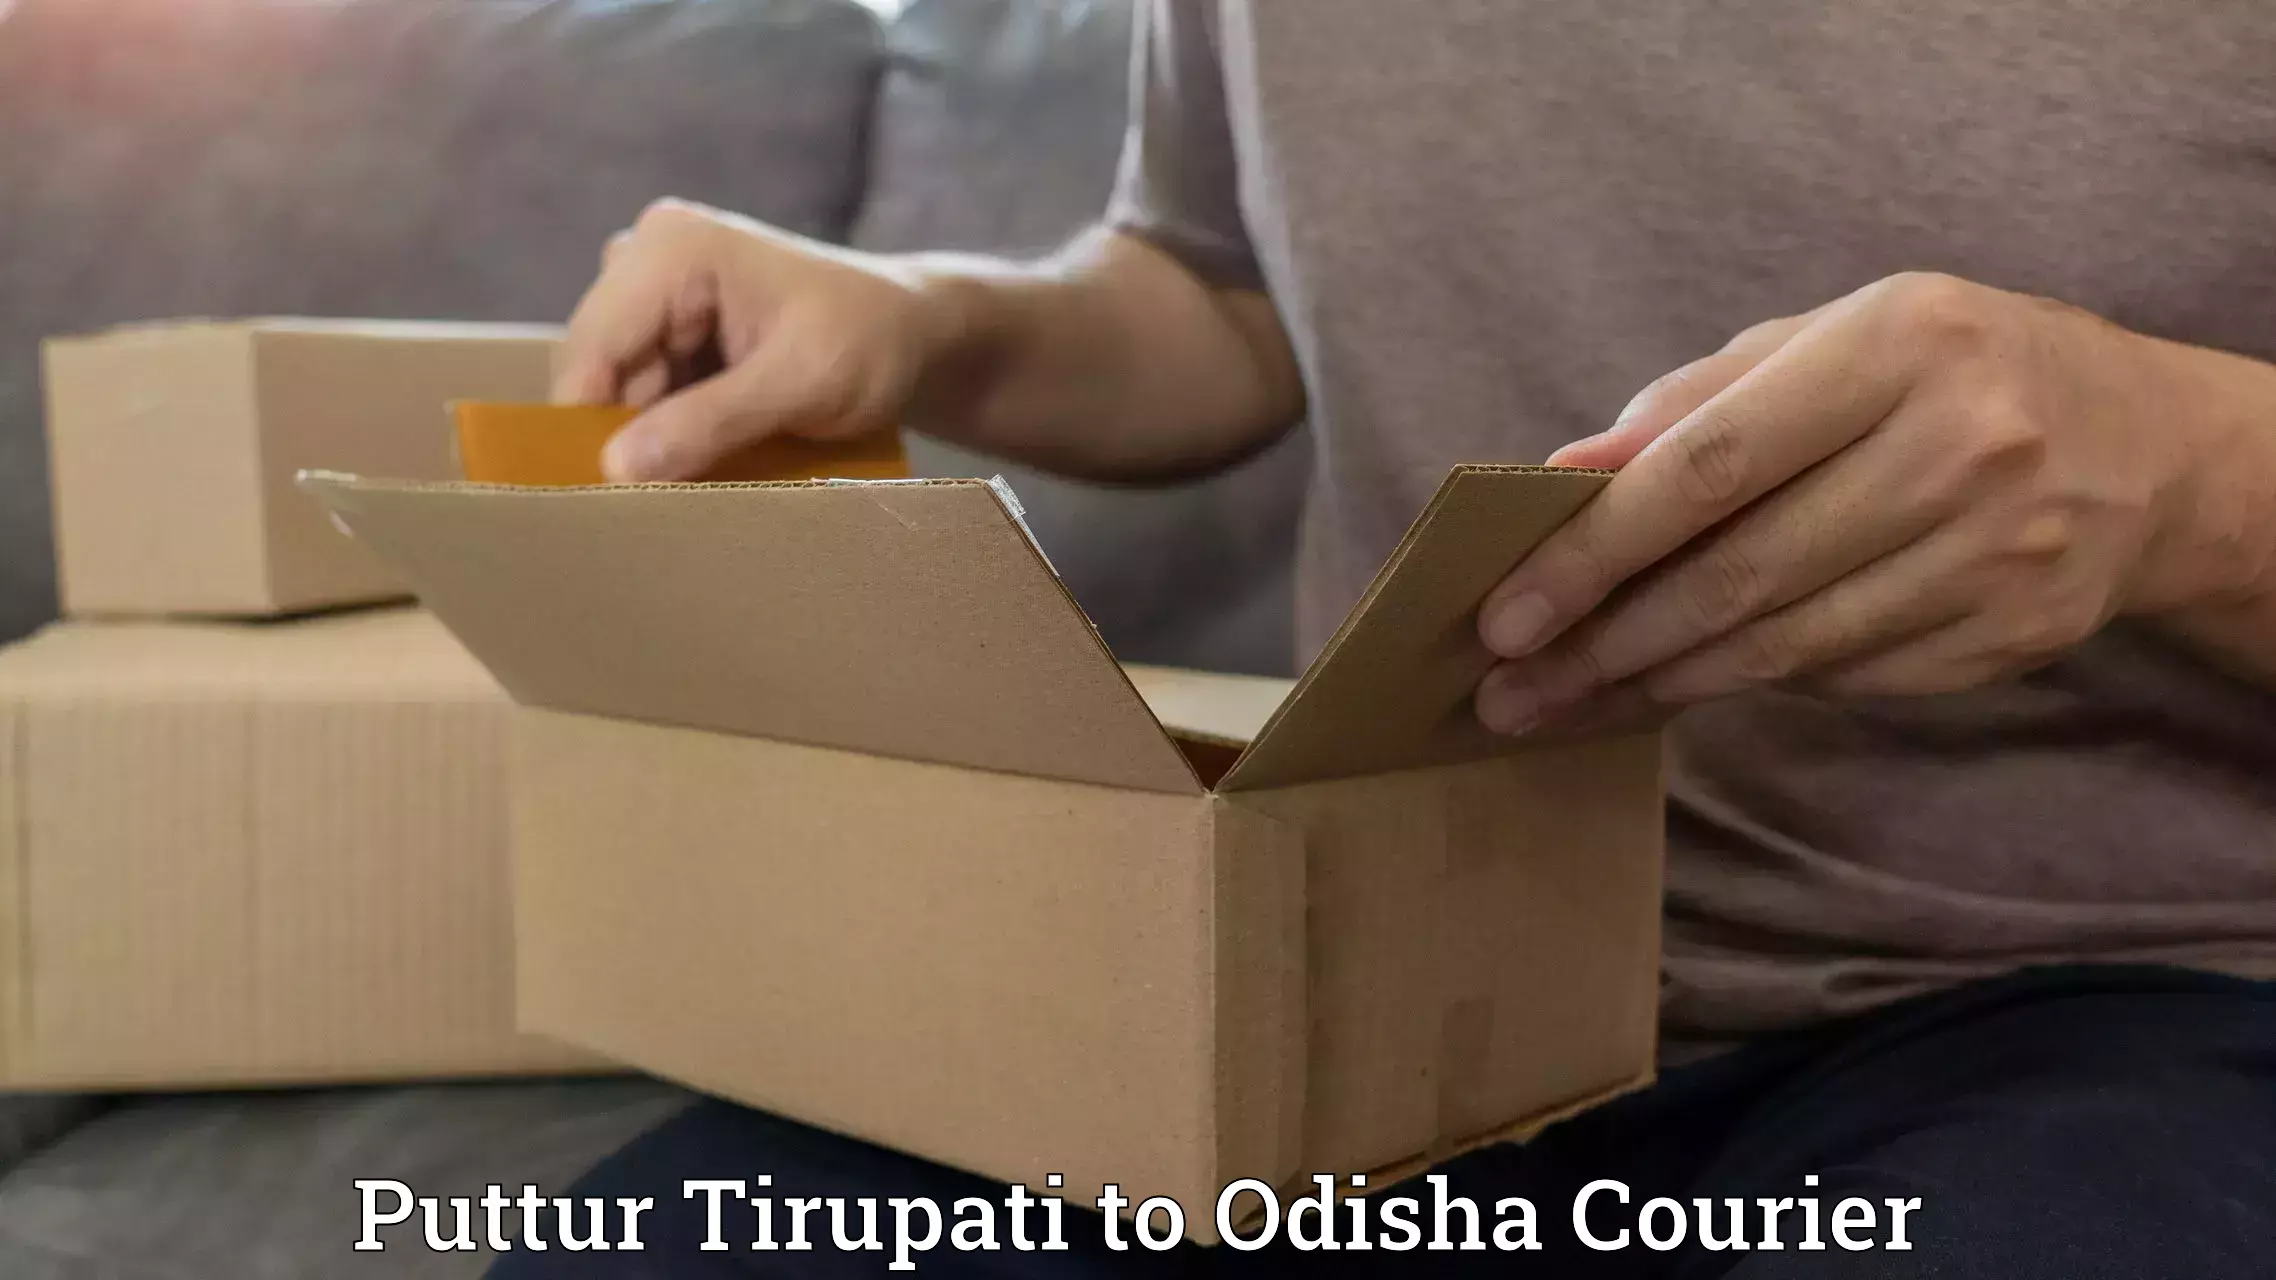 Professional courier handling Puttur Tirupati to Parlakhemundi